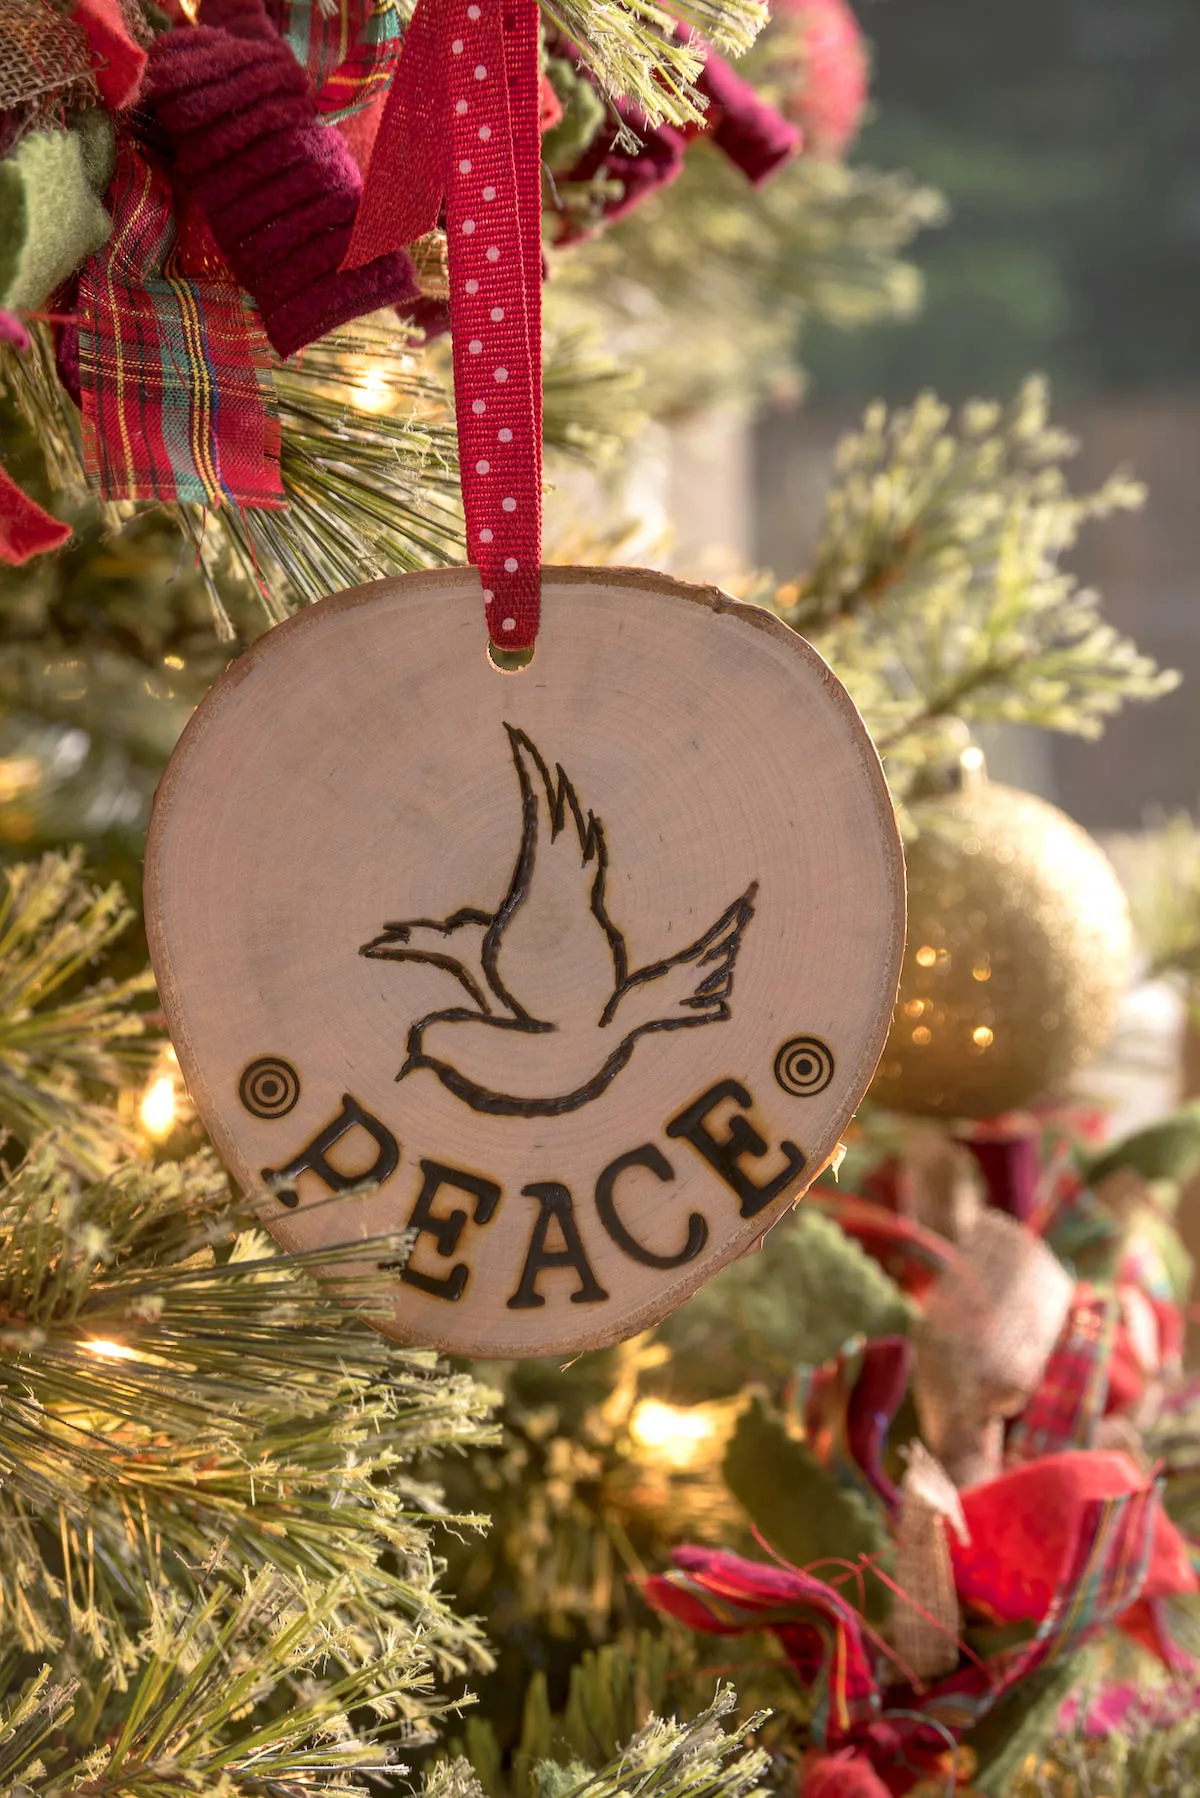 Peace wood slice ornament on a Christmas tree